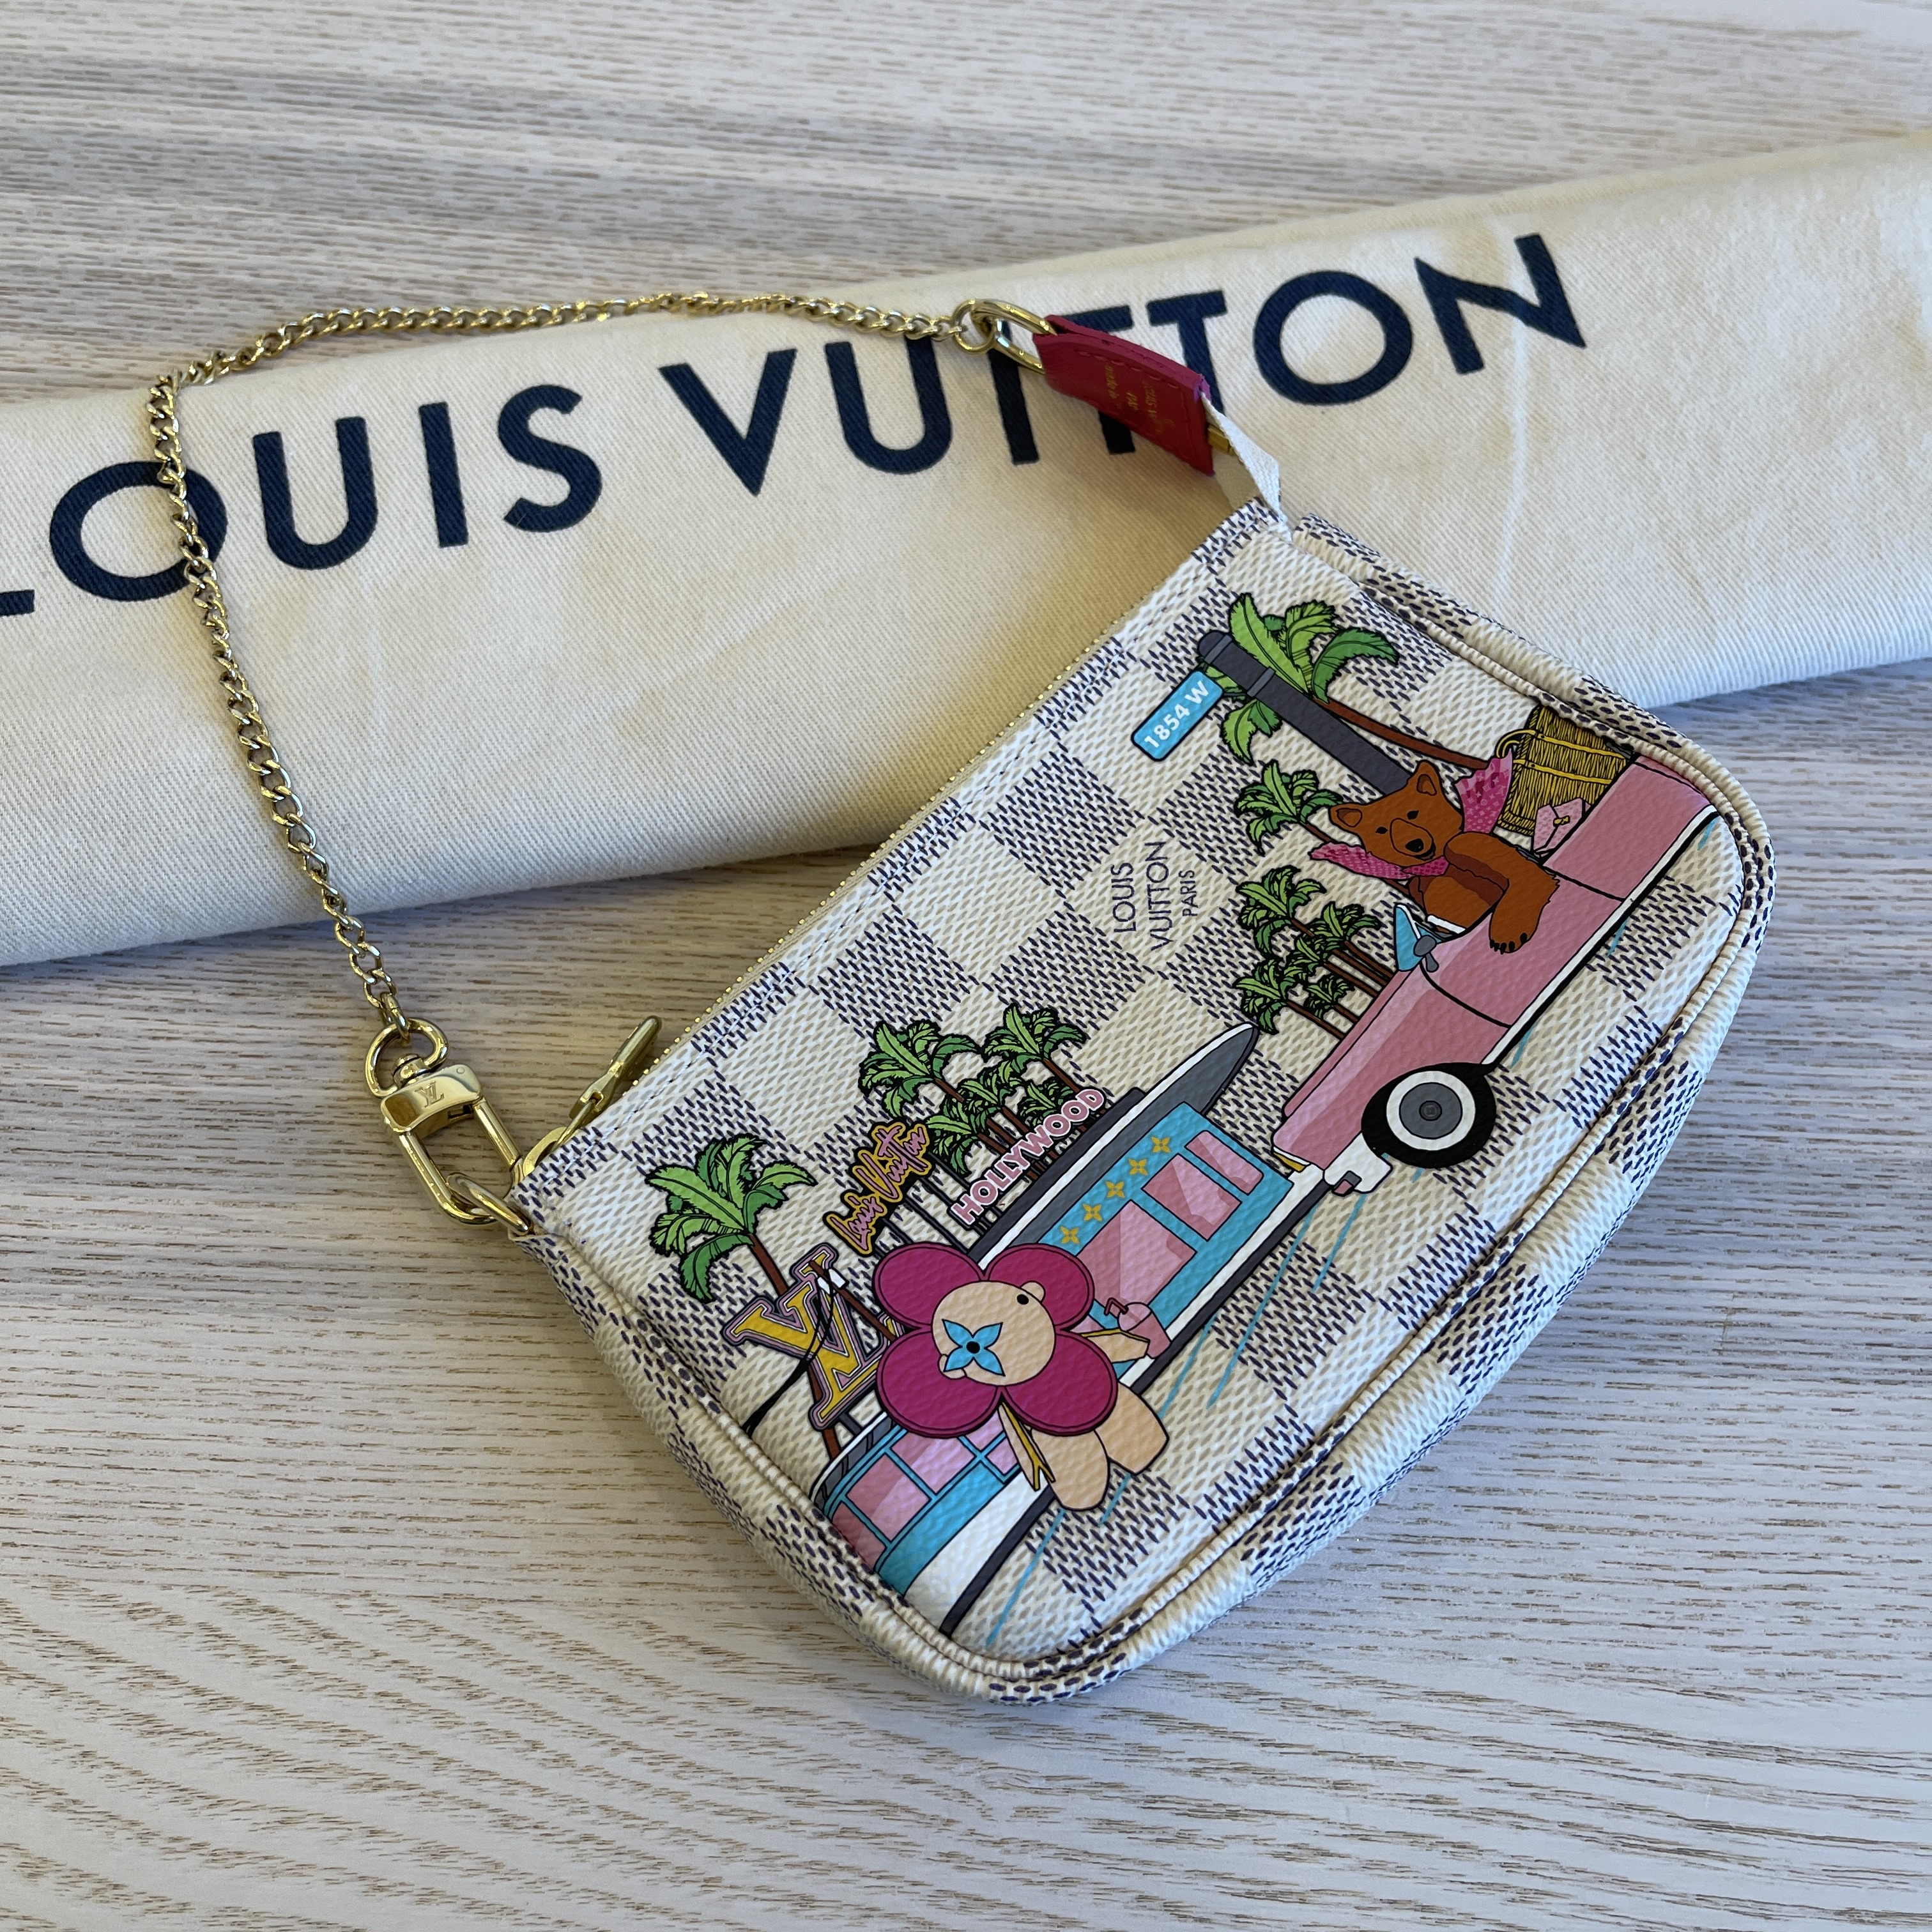 Louis Vuitton Damier Azur 2021 Christmas Animation Hollywood Bag